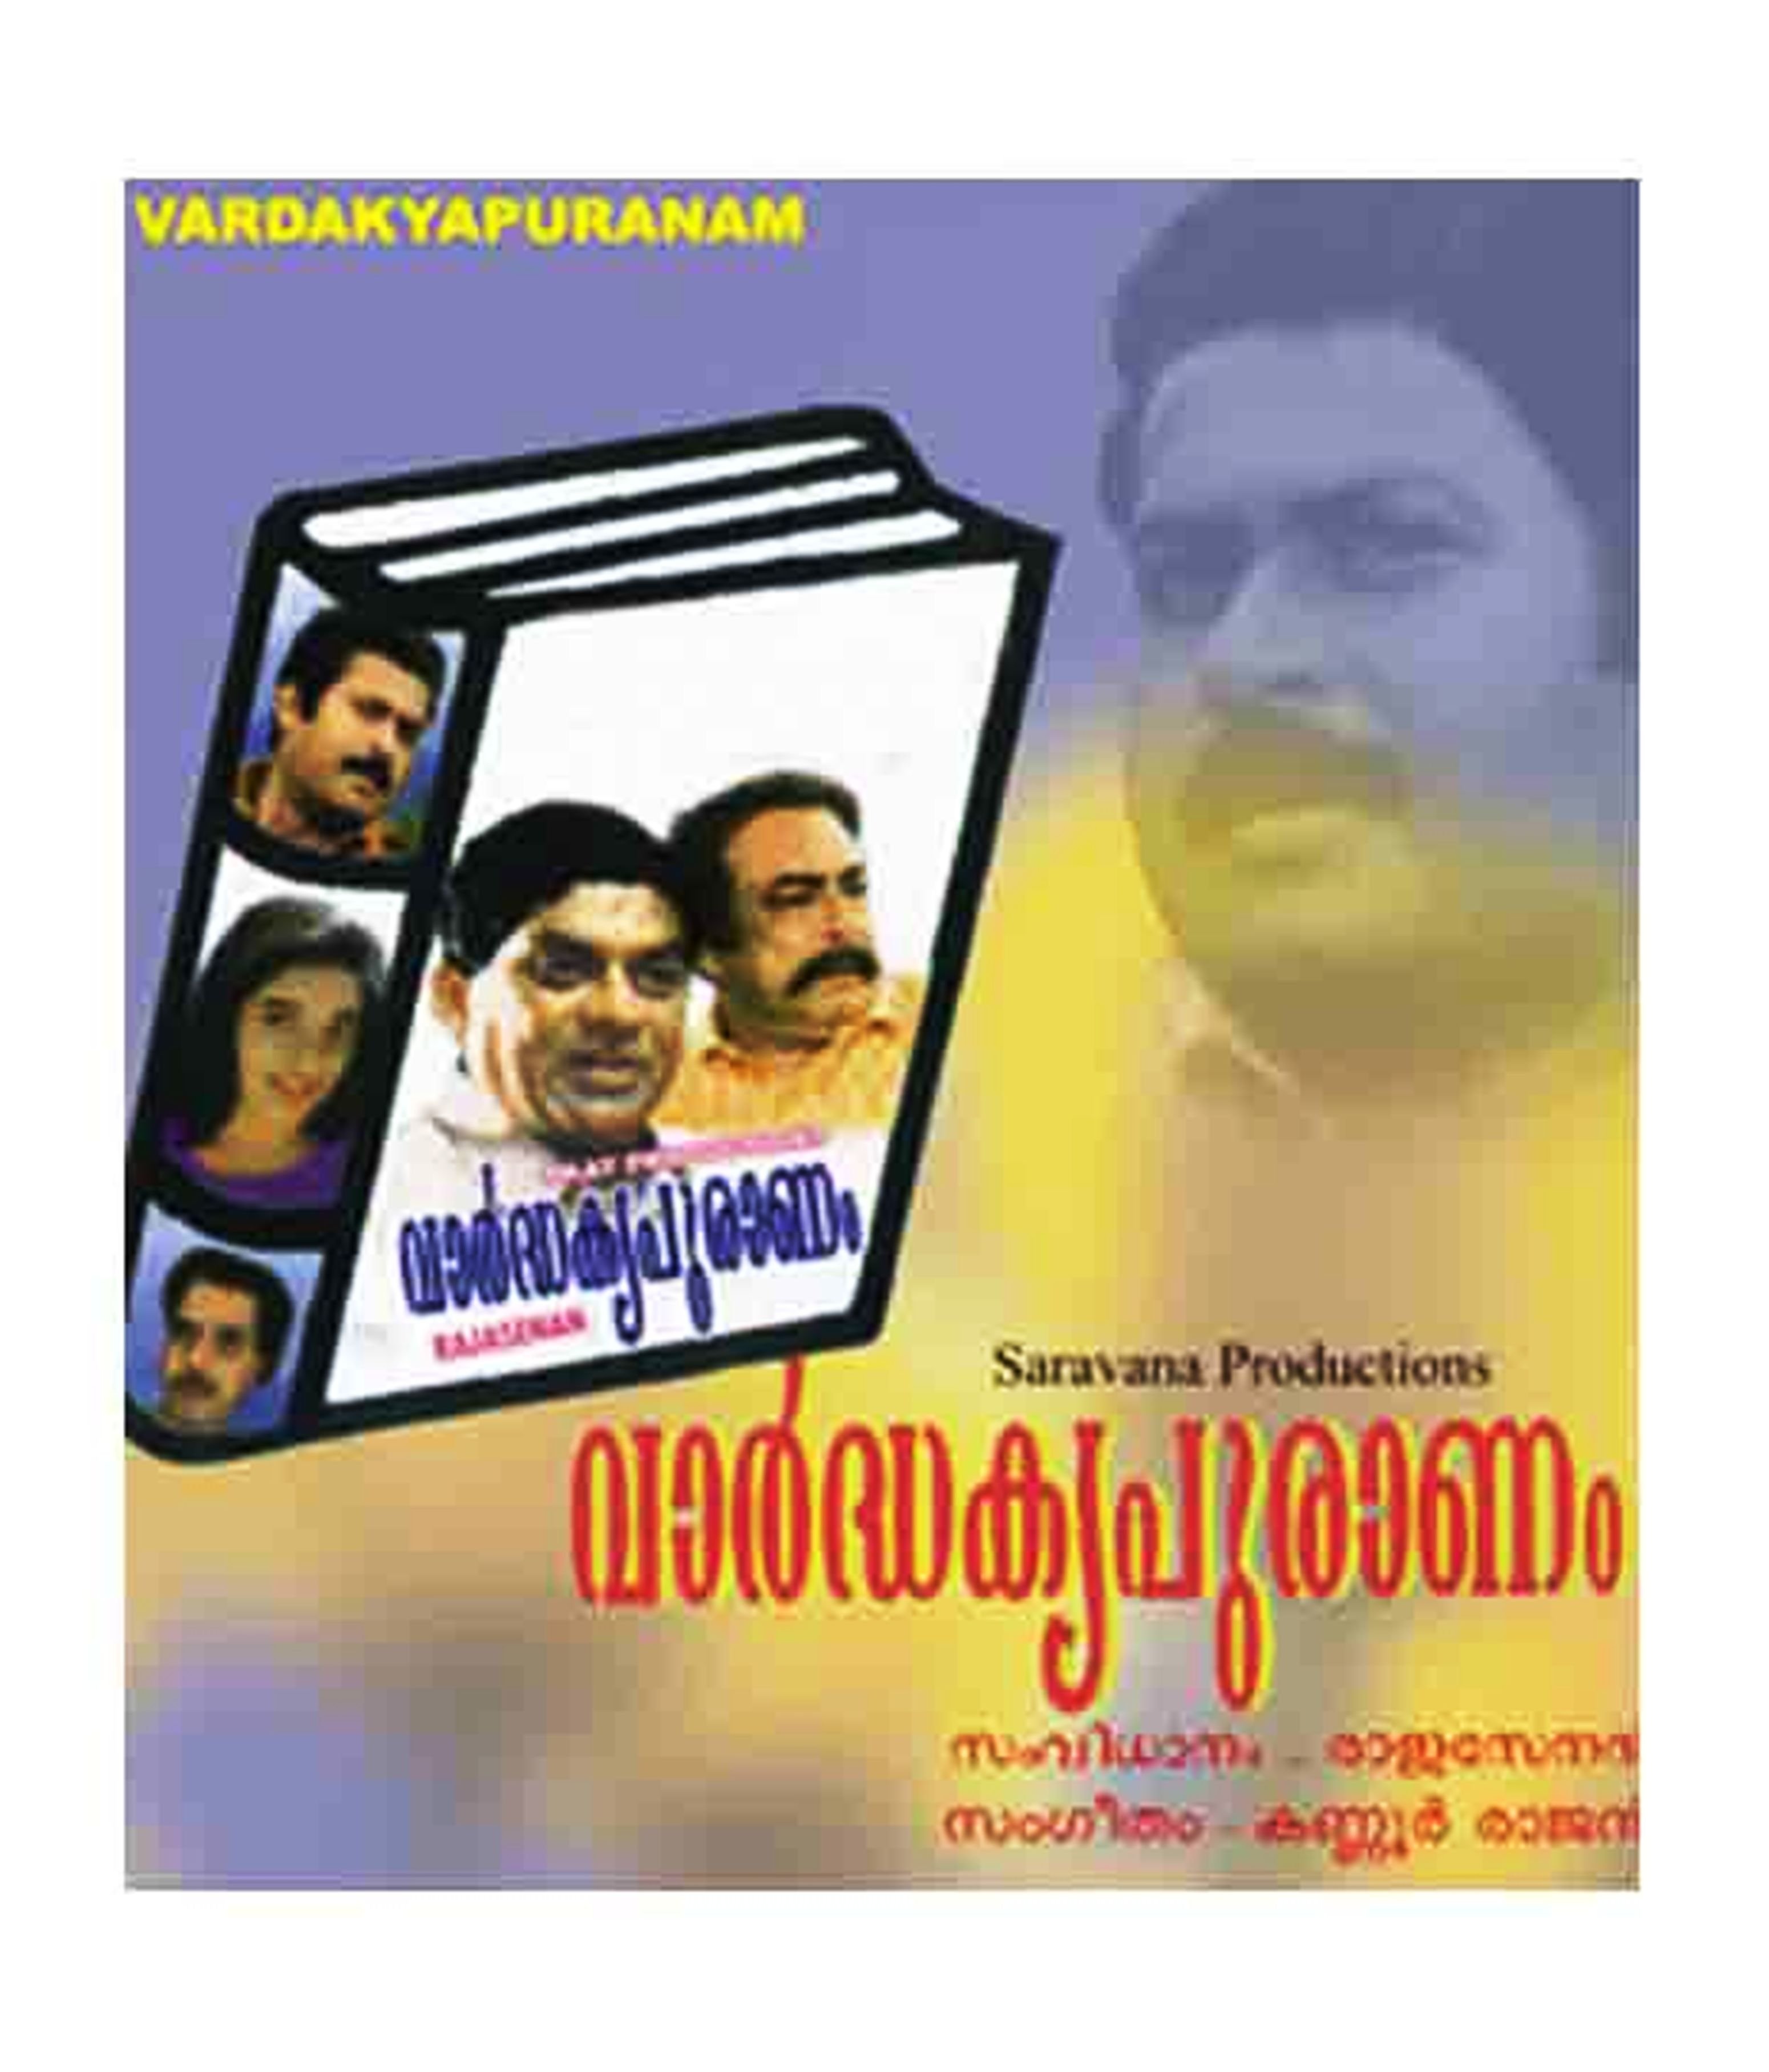 Vardhakya Puranam Movie Poster